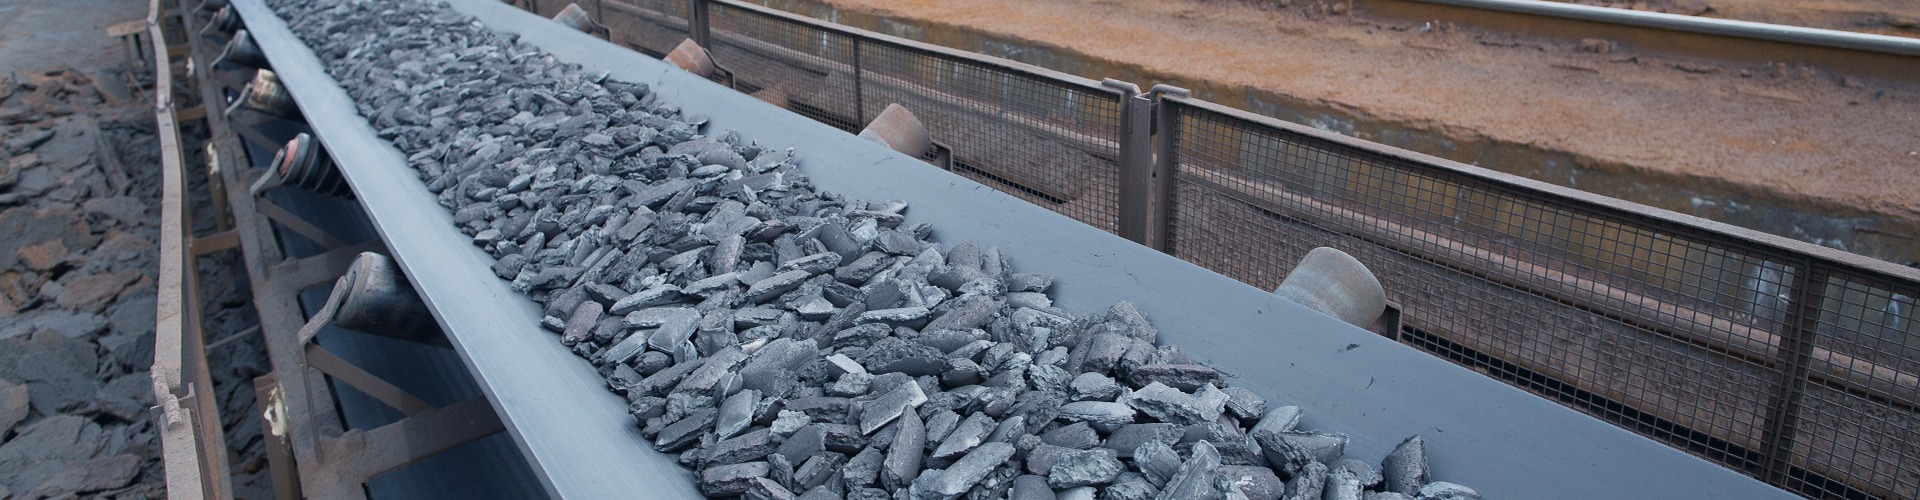 Sidewall Rubber Endless Conveyor Belt for Coal Feeder Mining